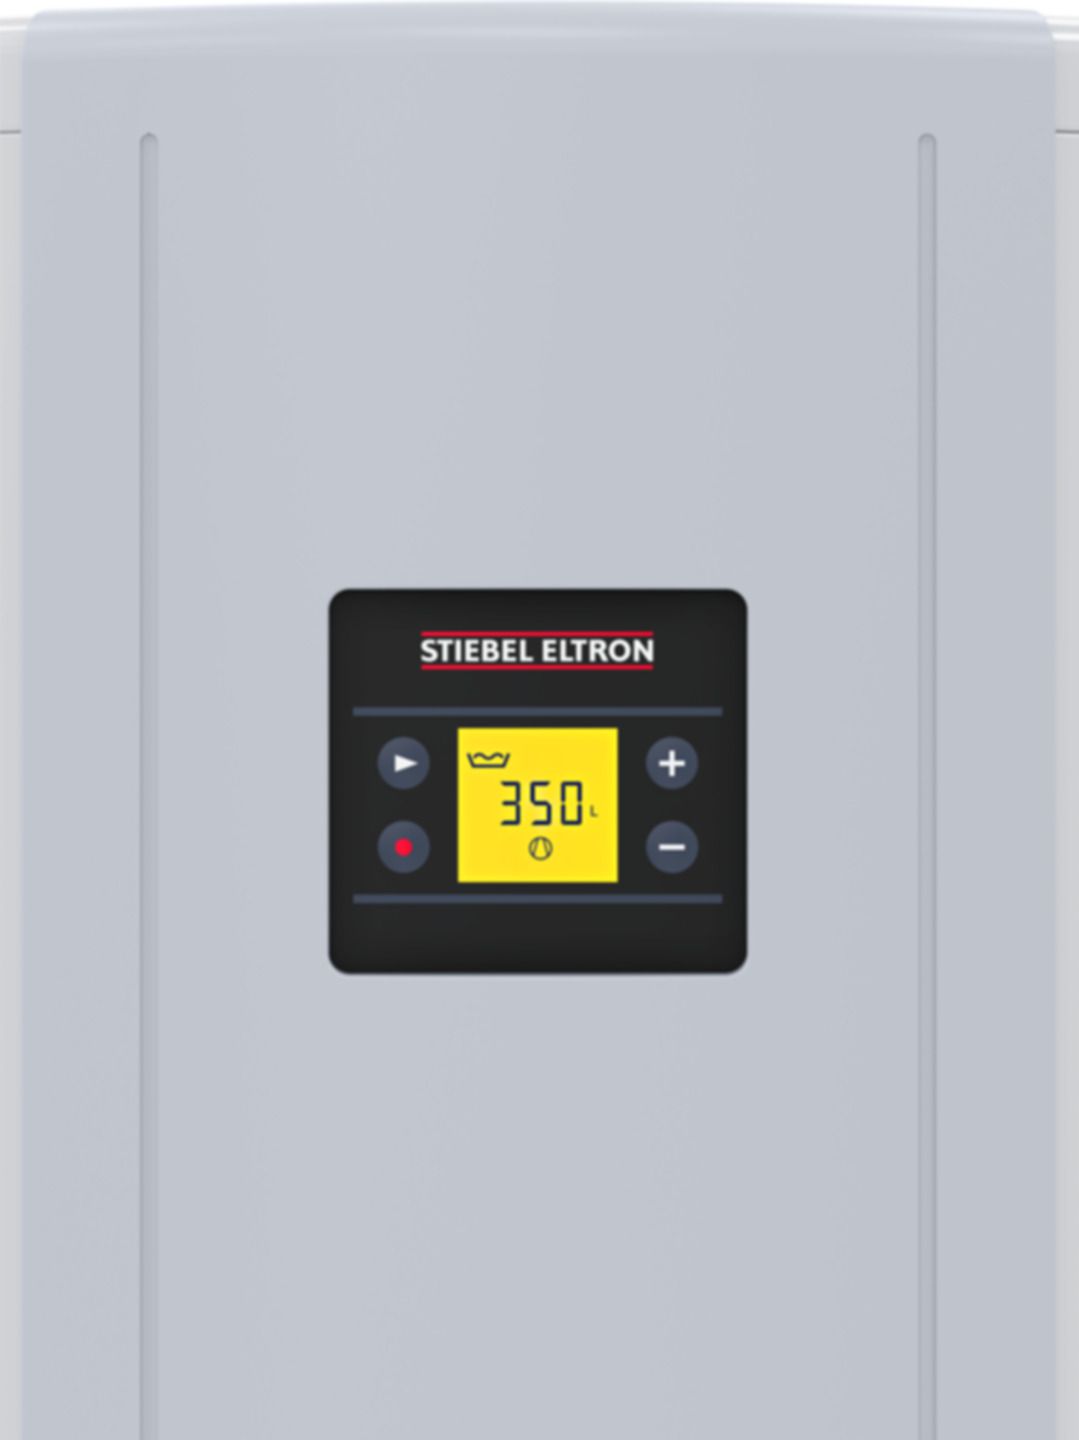 WP-Boiler WWK 300 electronic CH SOL 235240        1905 x 690 mm      230 V - Wärmepumpenboiler Stiebel Eltron